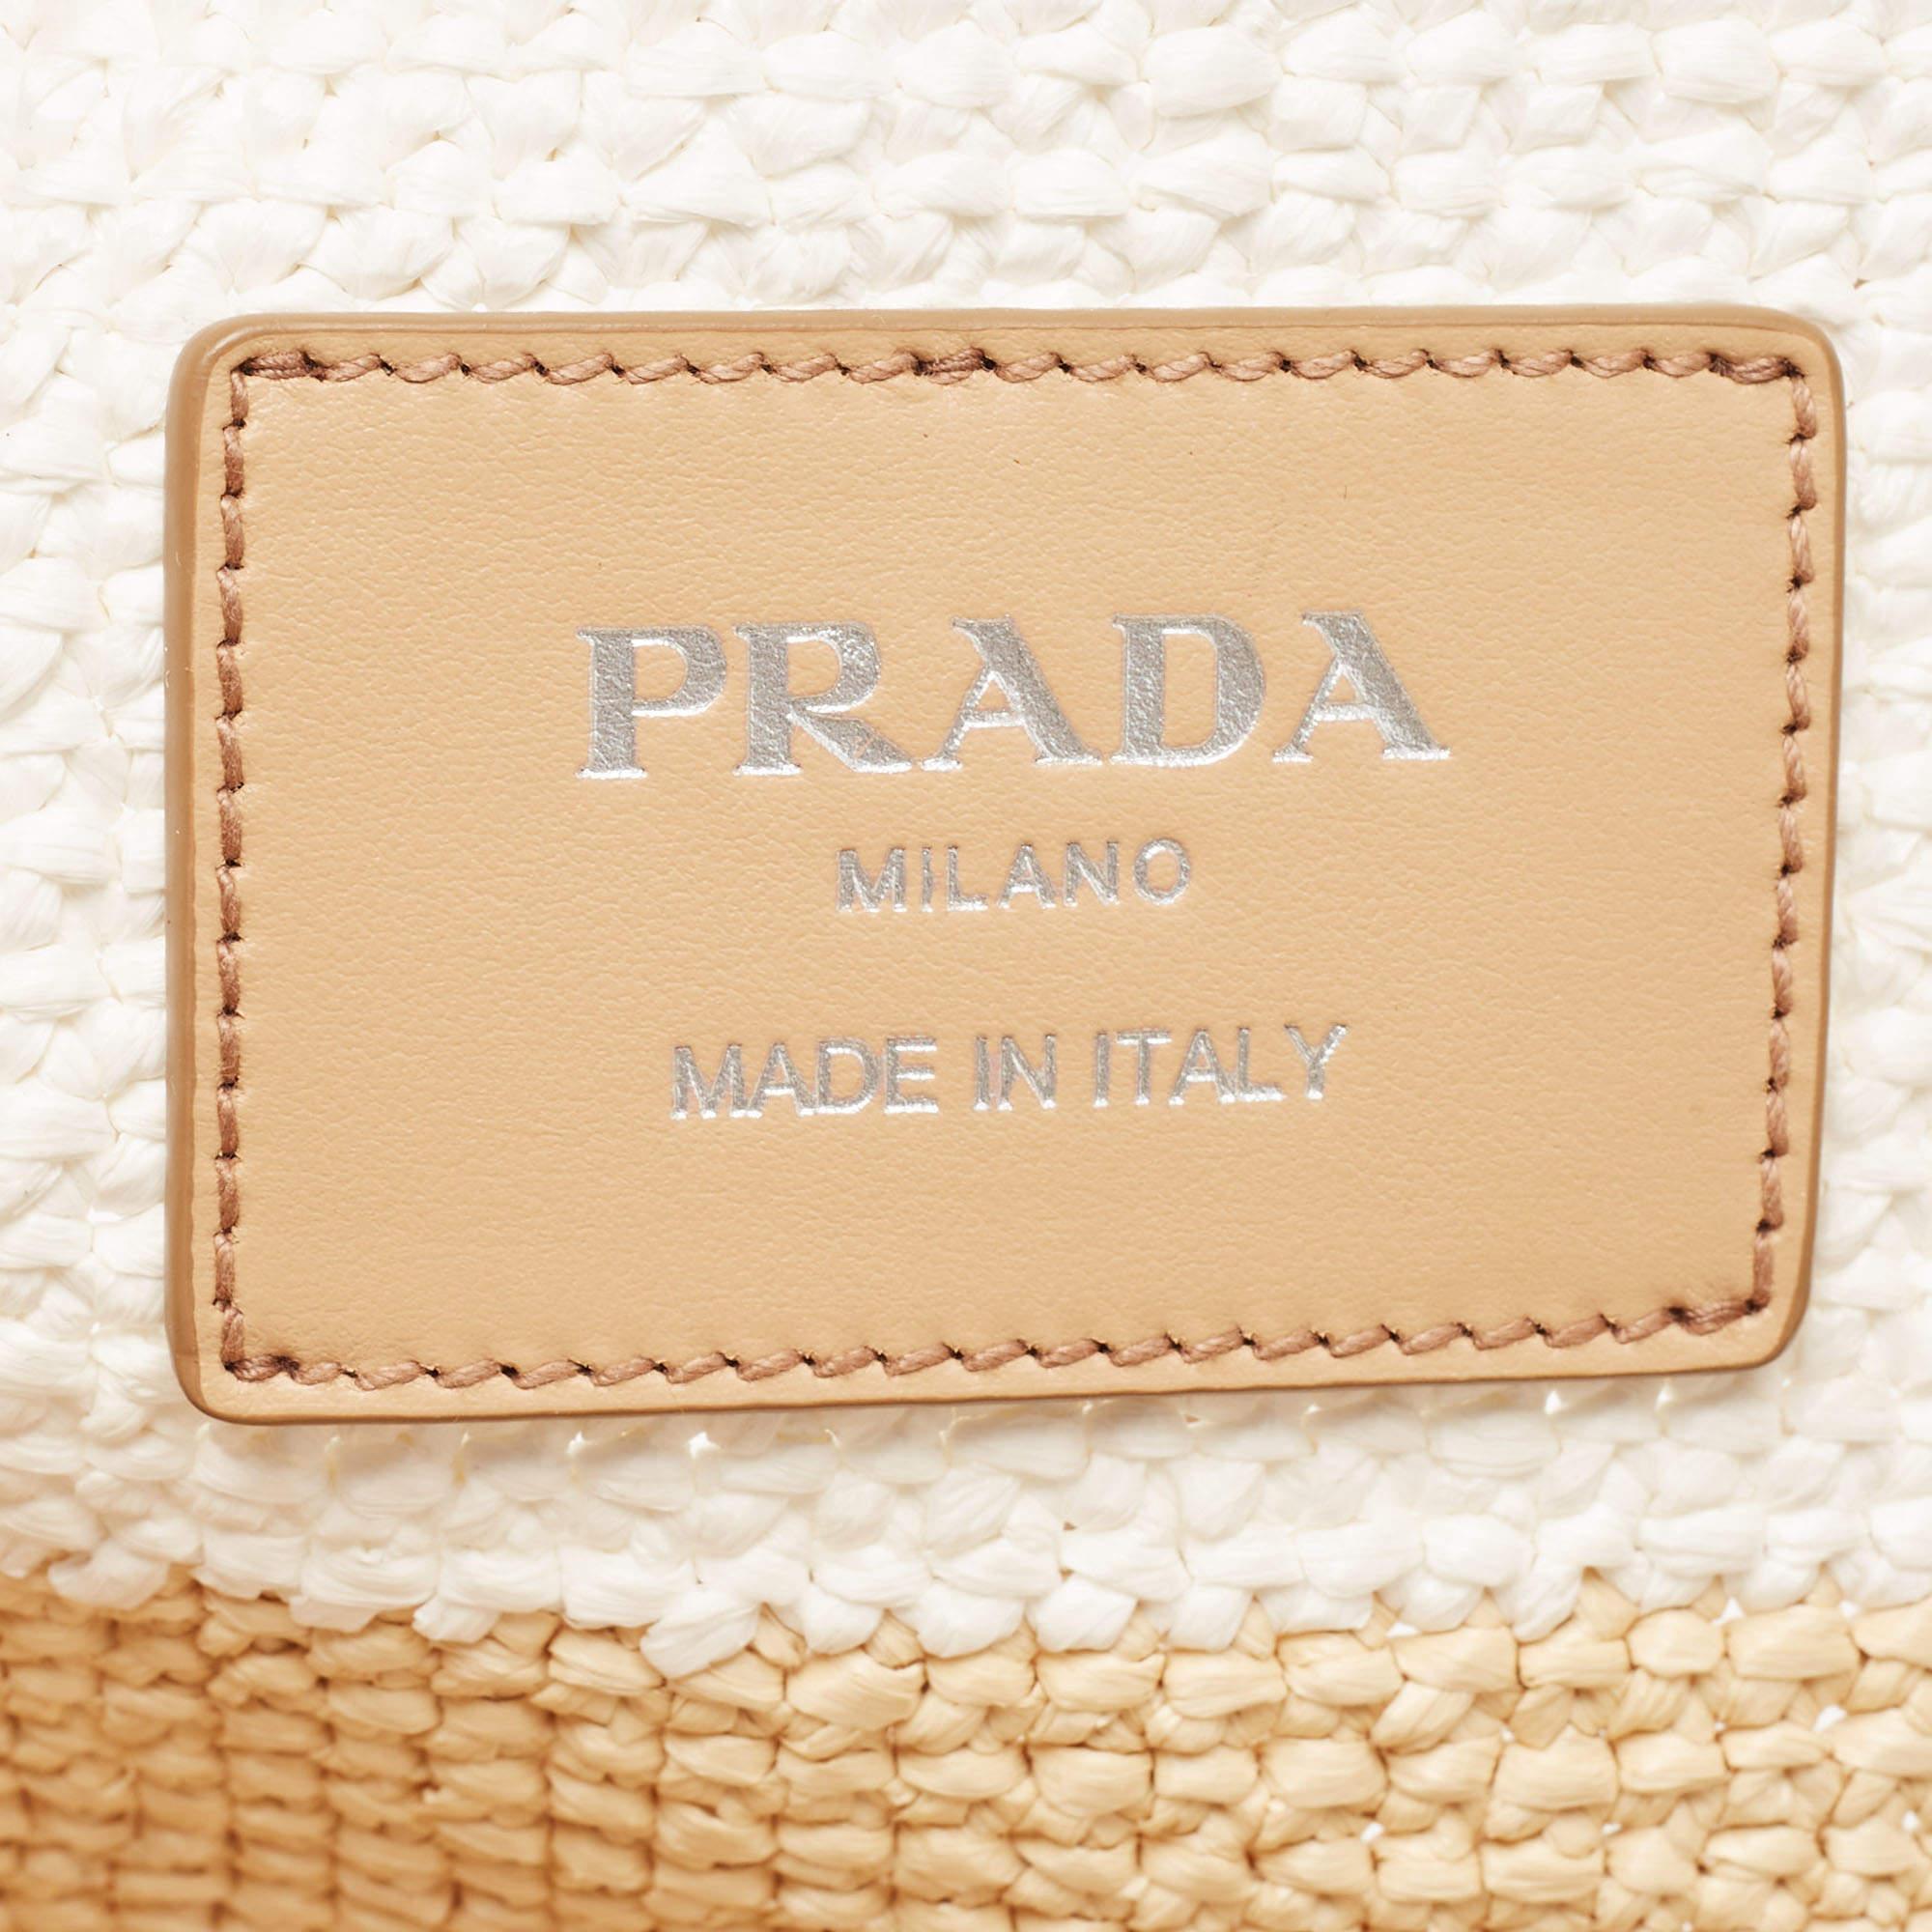 Prada White/Beige Crochet Straw and Leather Tote 6